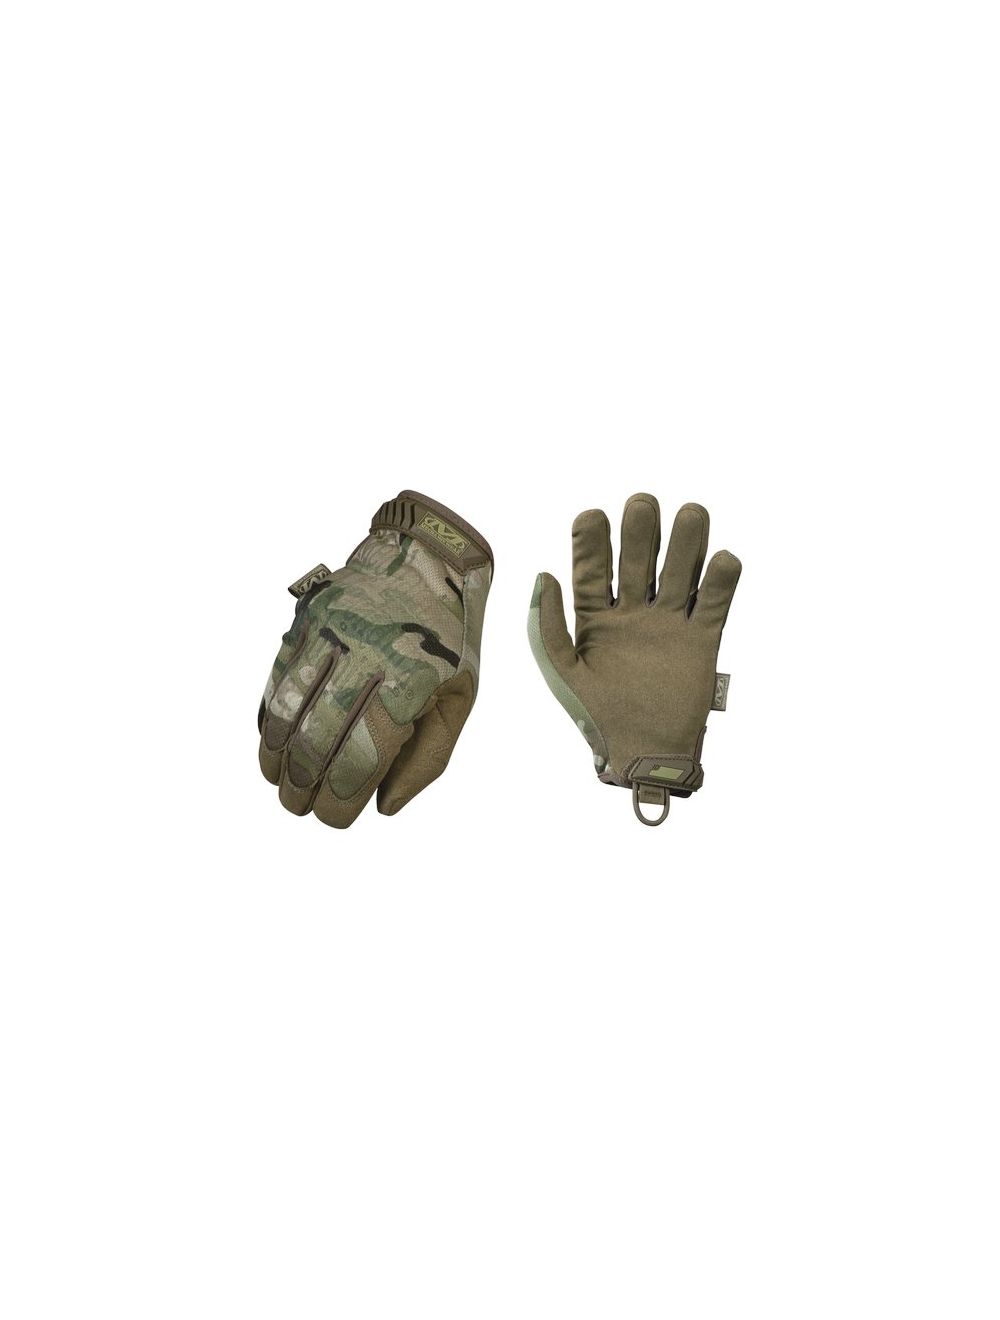 The Original Glove